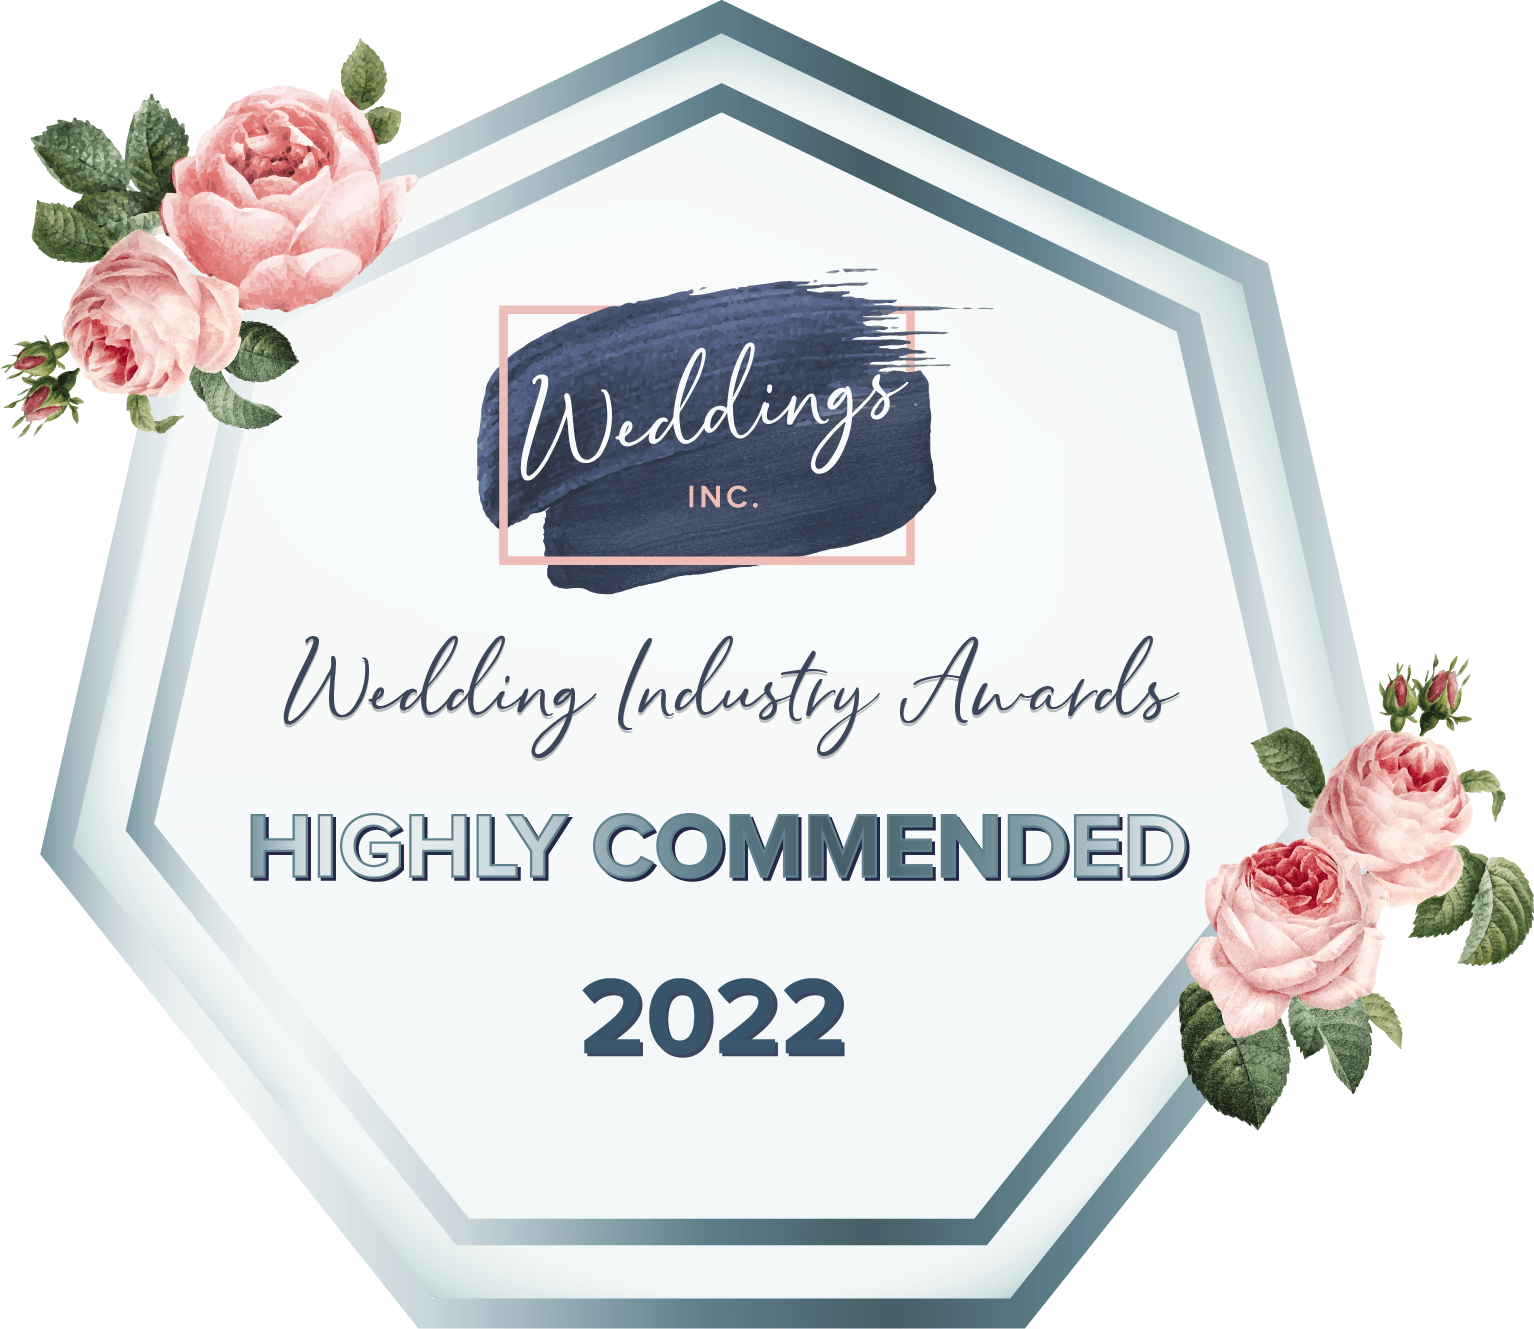 Sal's Forever Flowers, winner of the Highly Commended 2022 Wedding Industry Awards